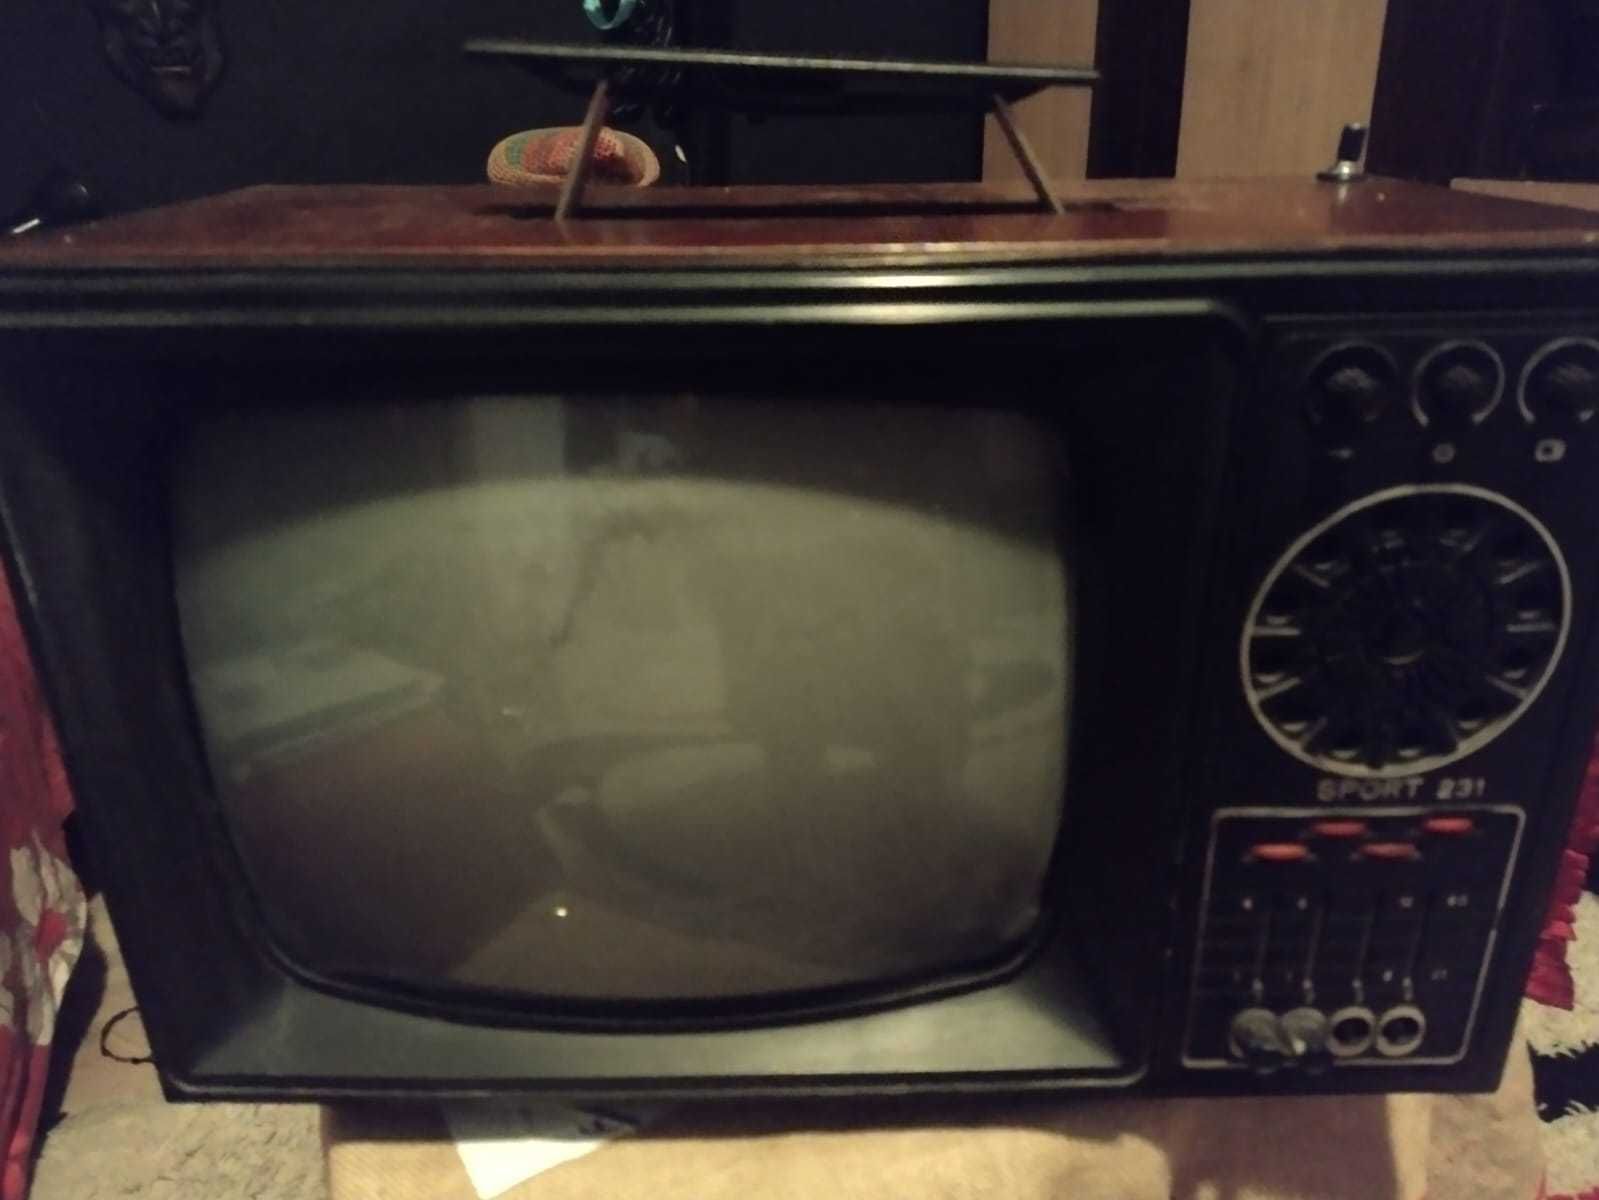 Televizor SPORT 231 postdecembrist,  functional